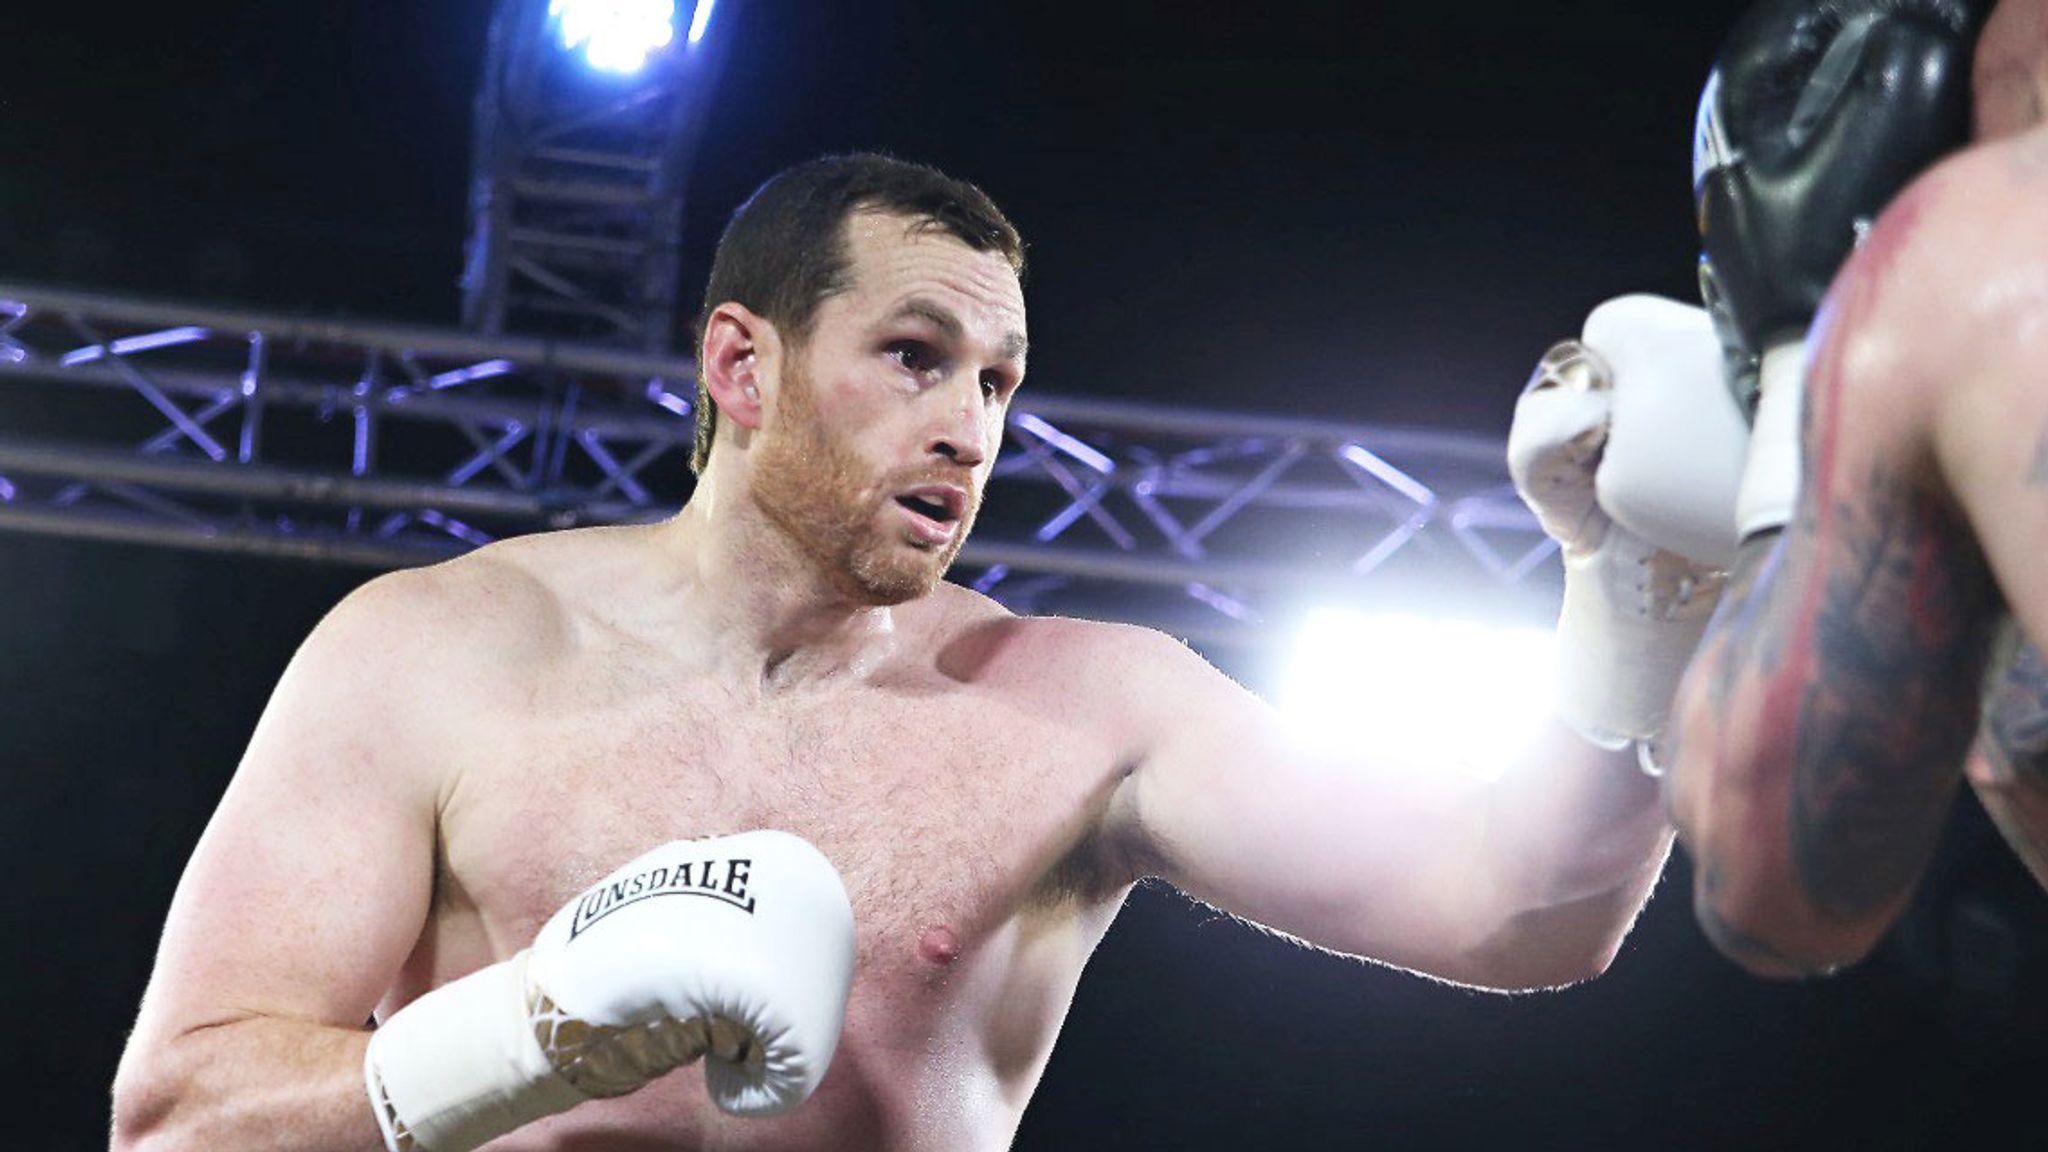 David Price earns second-round knockout against Vaclaj Pejsar, Boxing News